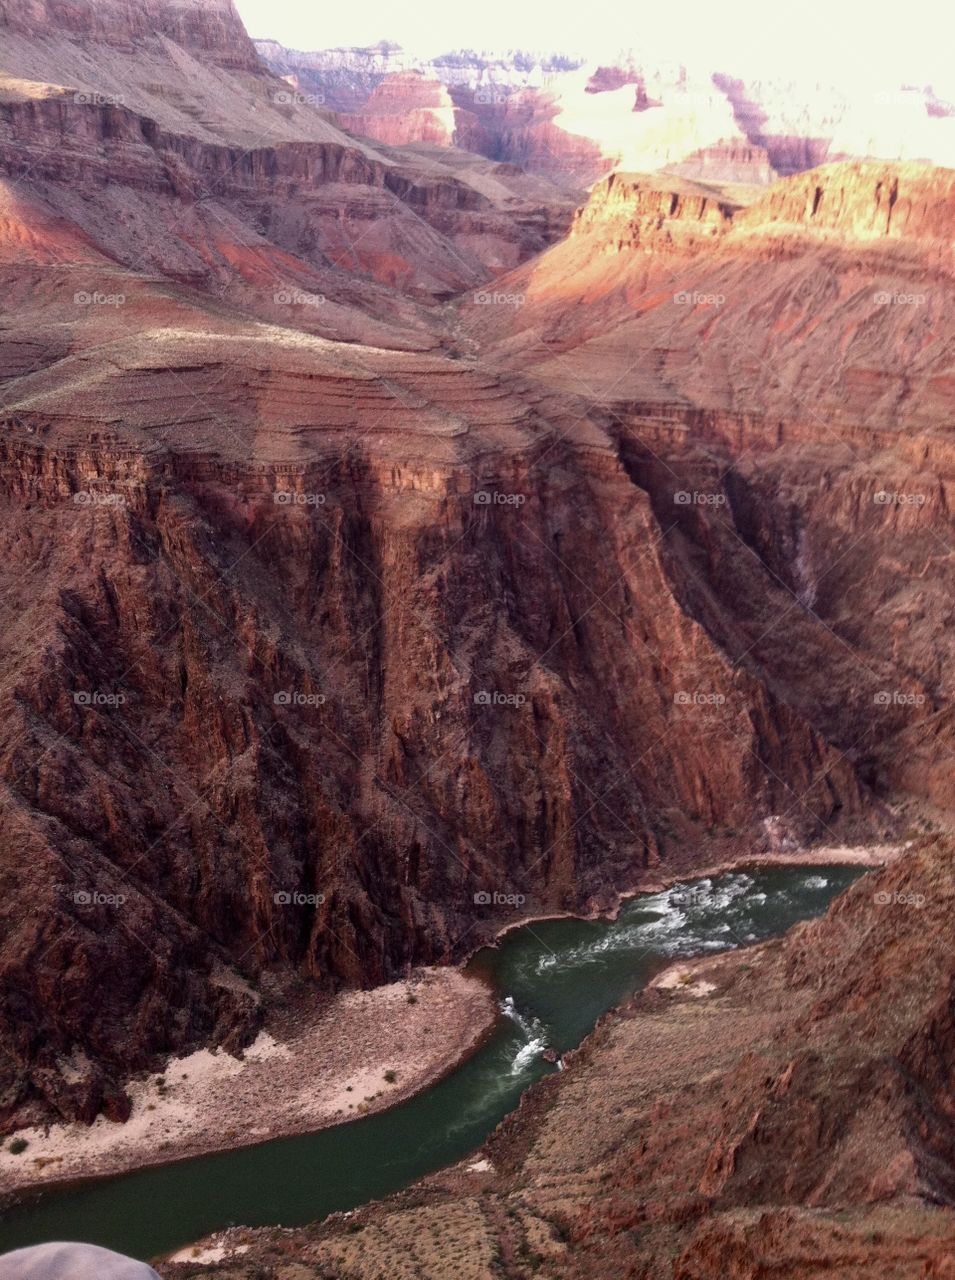 Colorado River in the Grand Canyon 